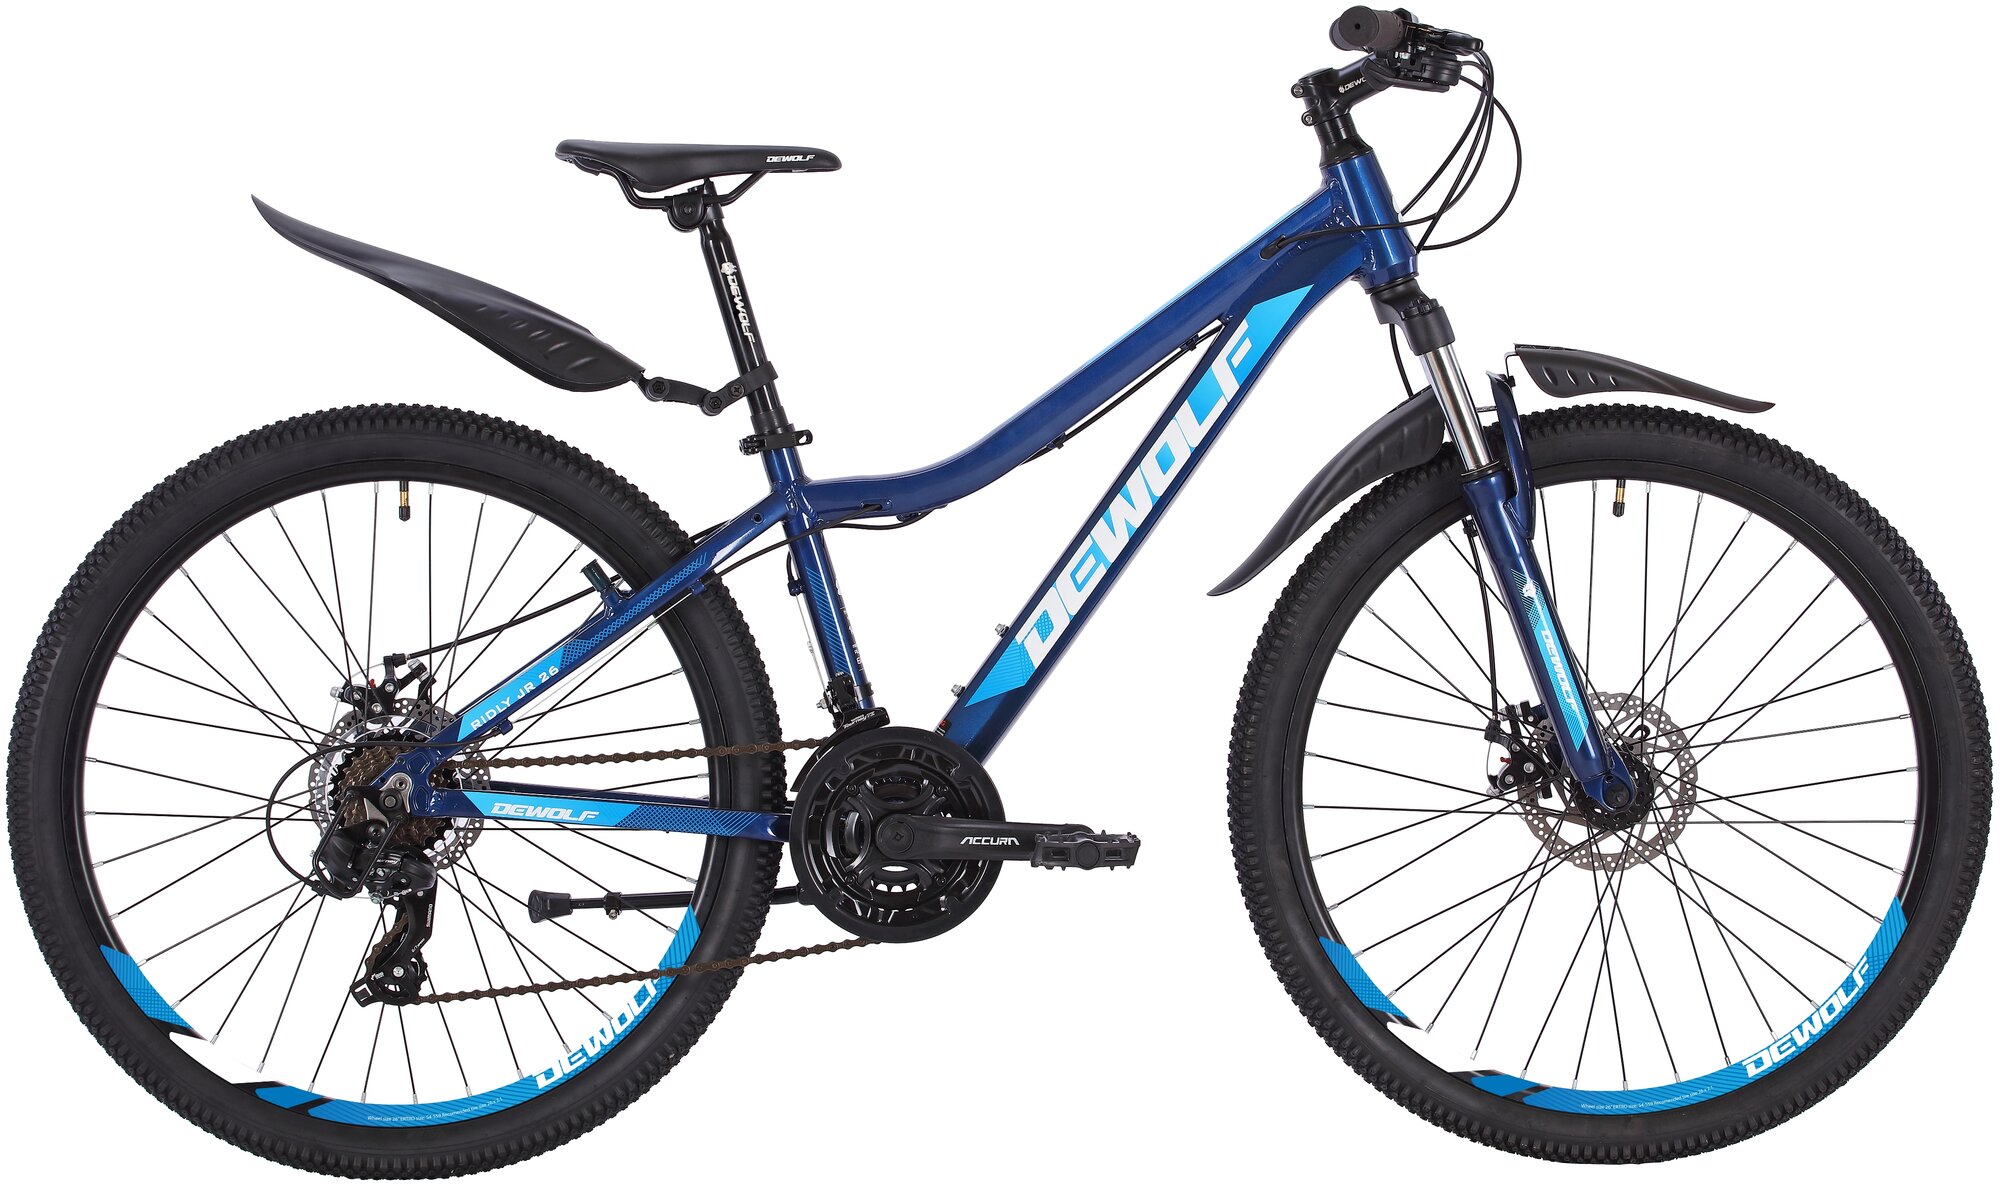 Велосипед детский Dewolf 2022 Ridly JR 26, One Size Only, chameleon dark blue/white/light blue